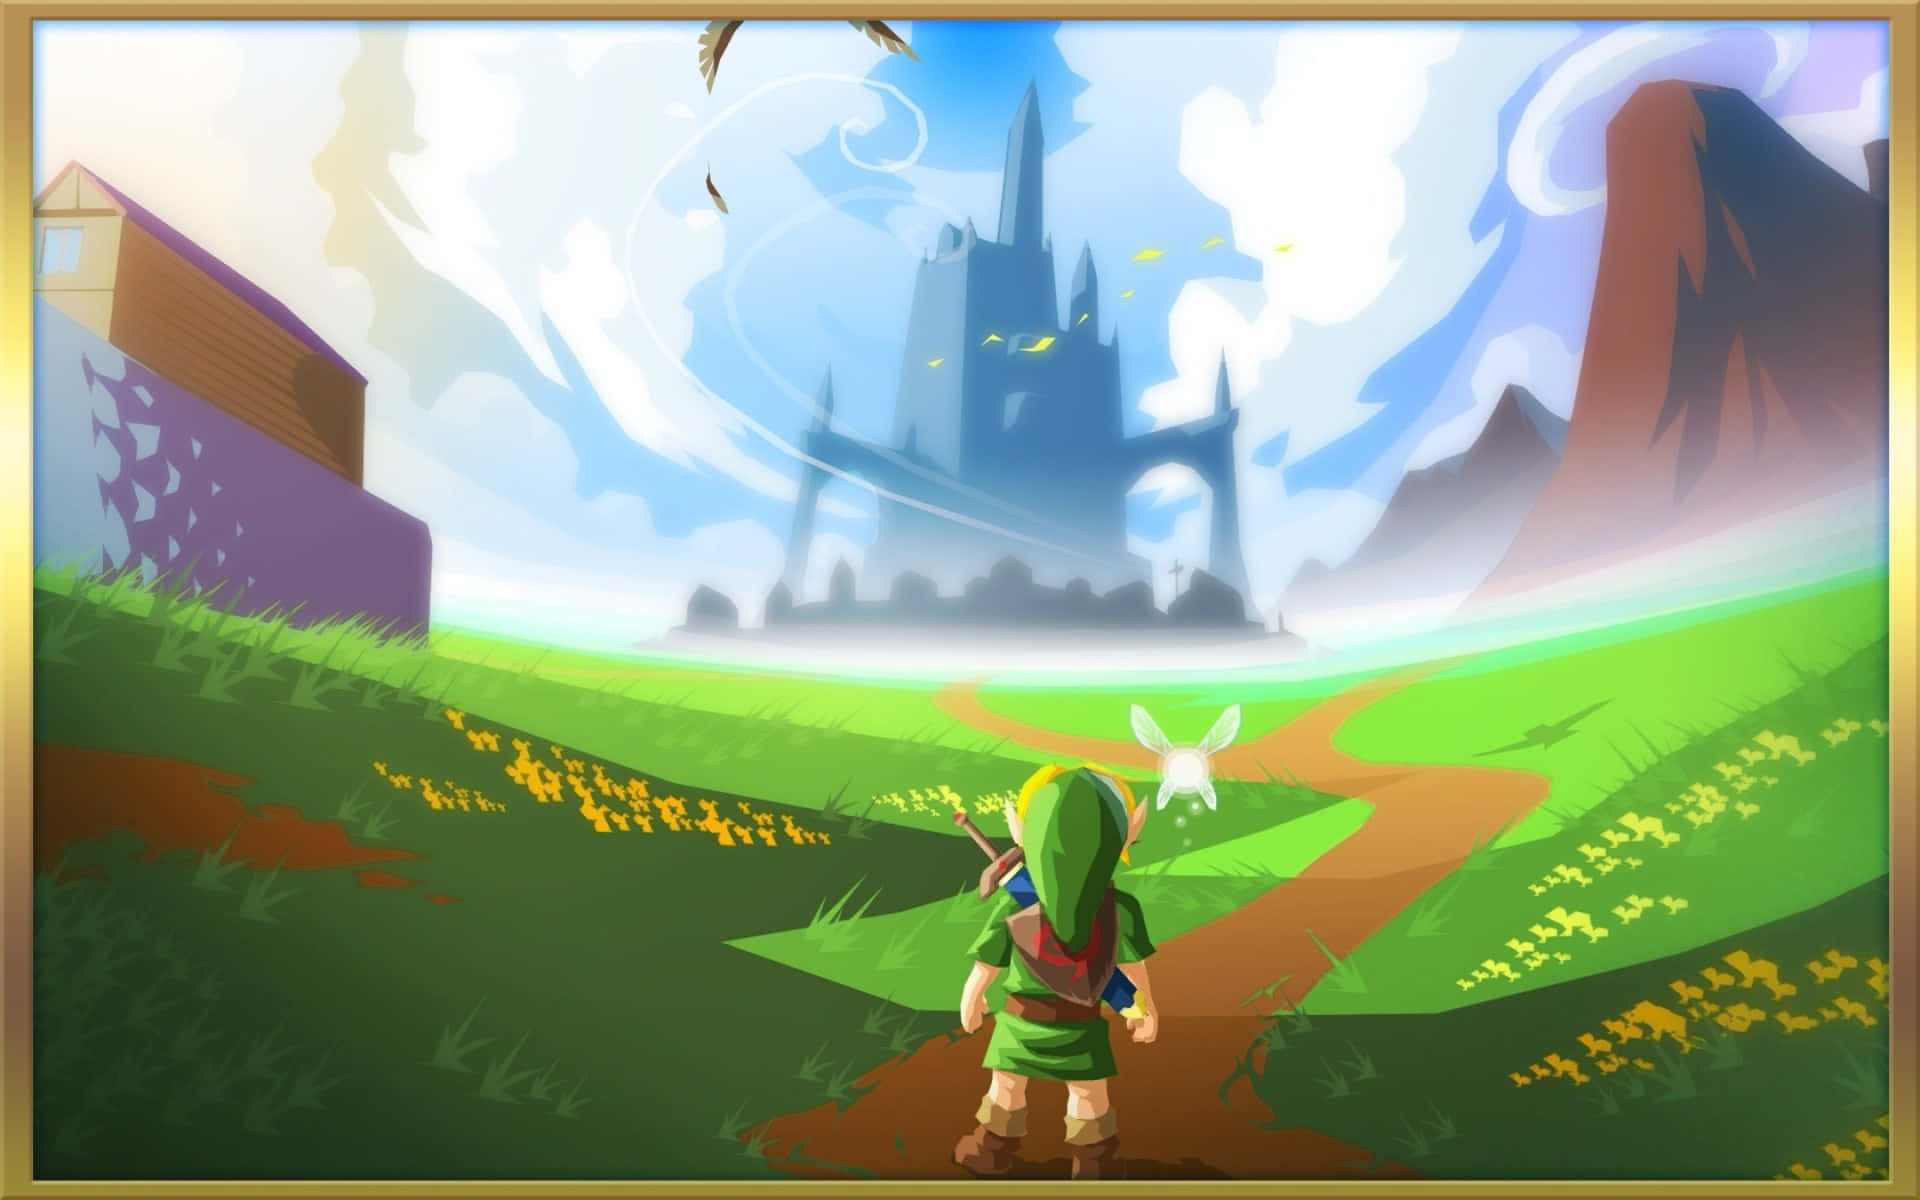 Link and Zelda in a Vibrant Adventure Wallpaper